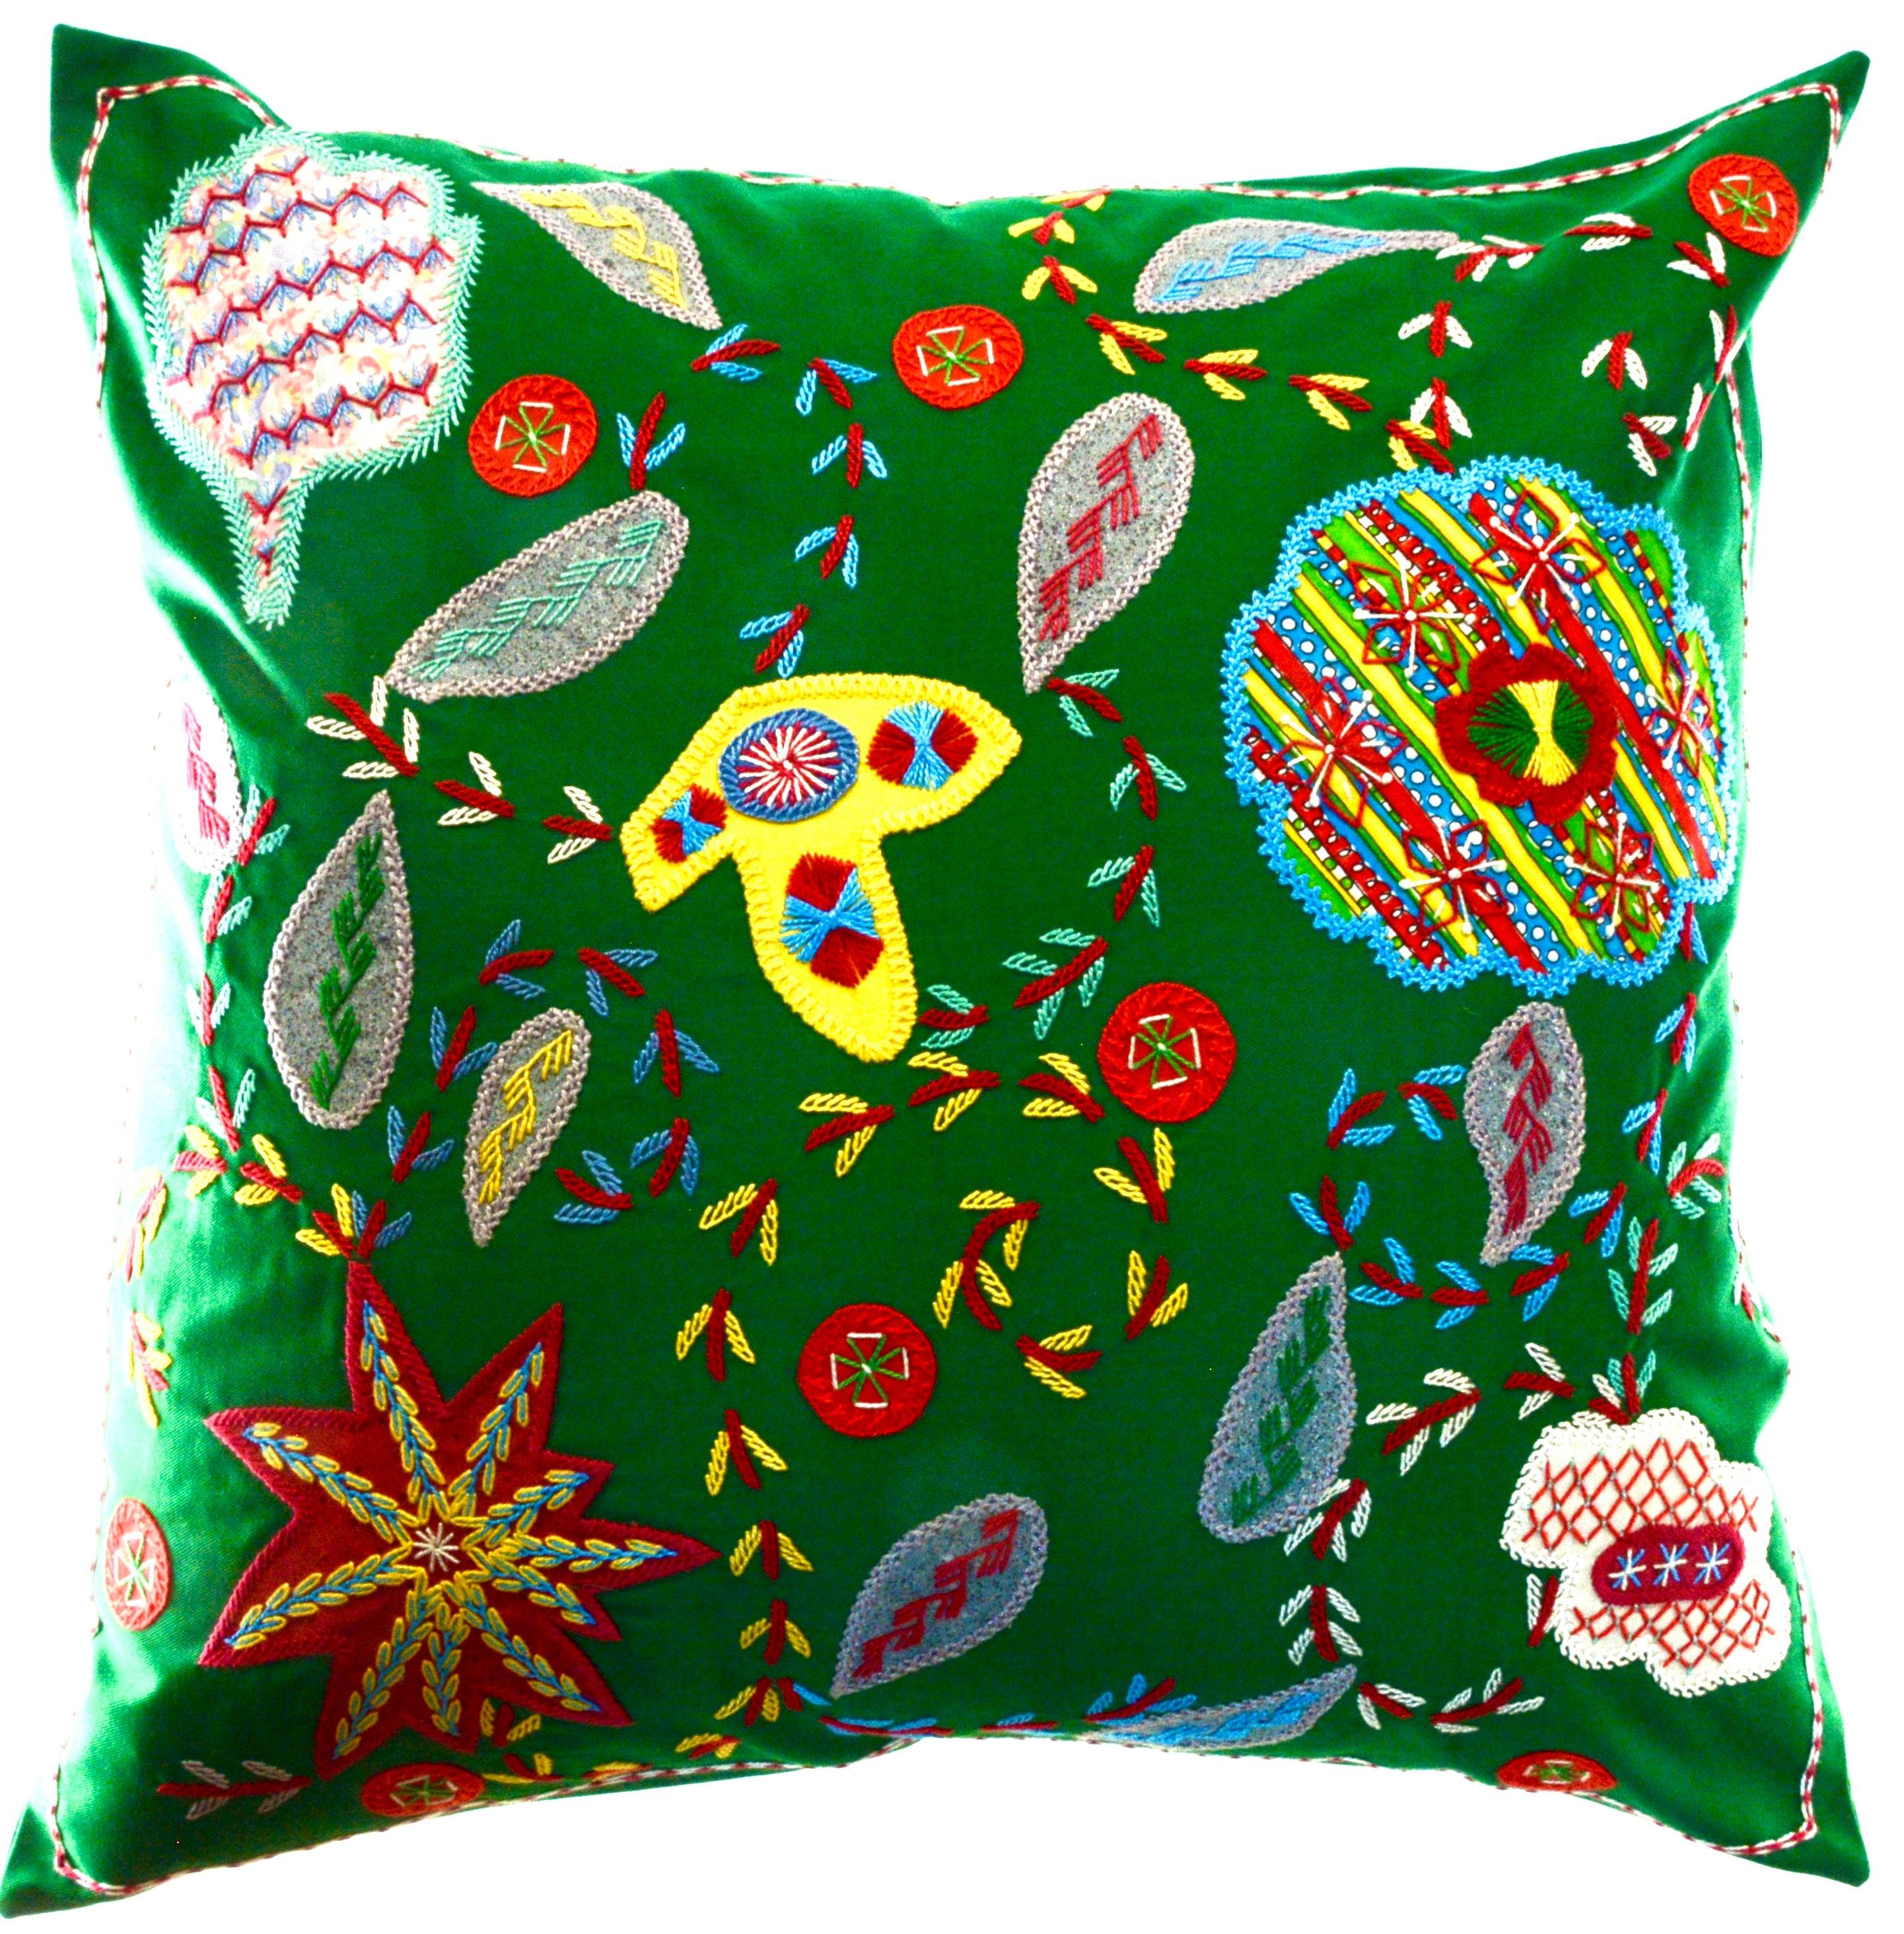 Rosas Design Embroidered Pillow on Green Honduras Threads